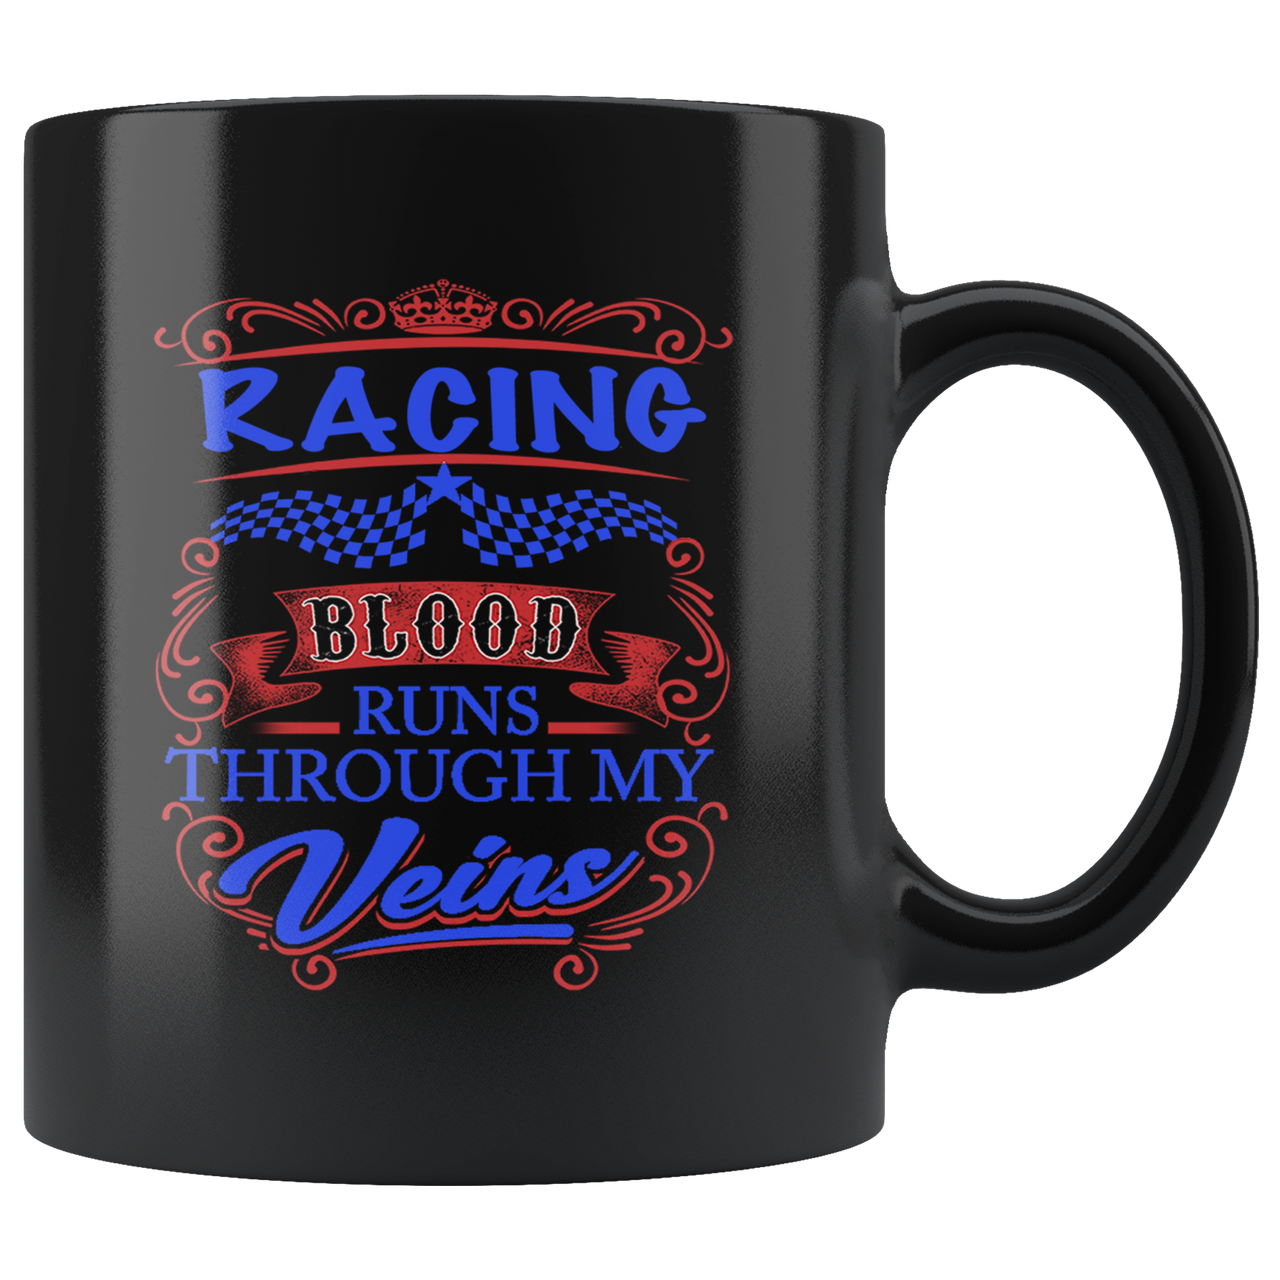 Racing Blood Runs Through My Veins Mug!